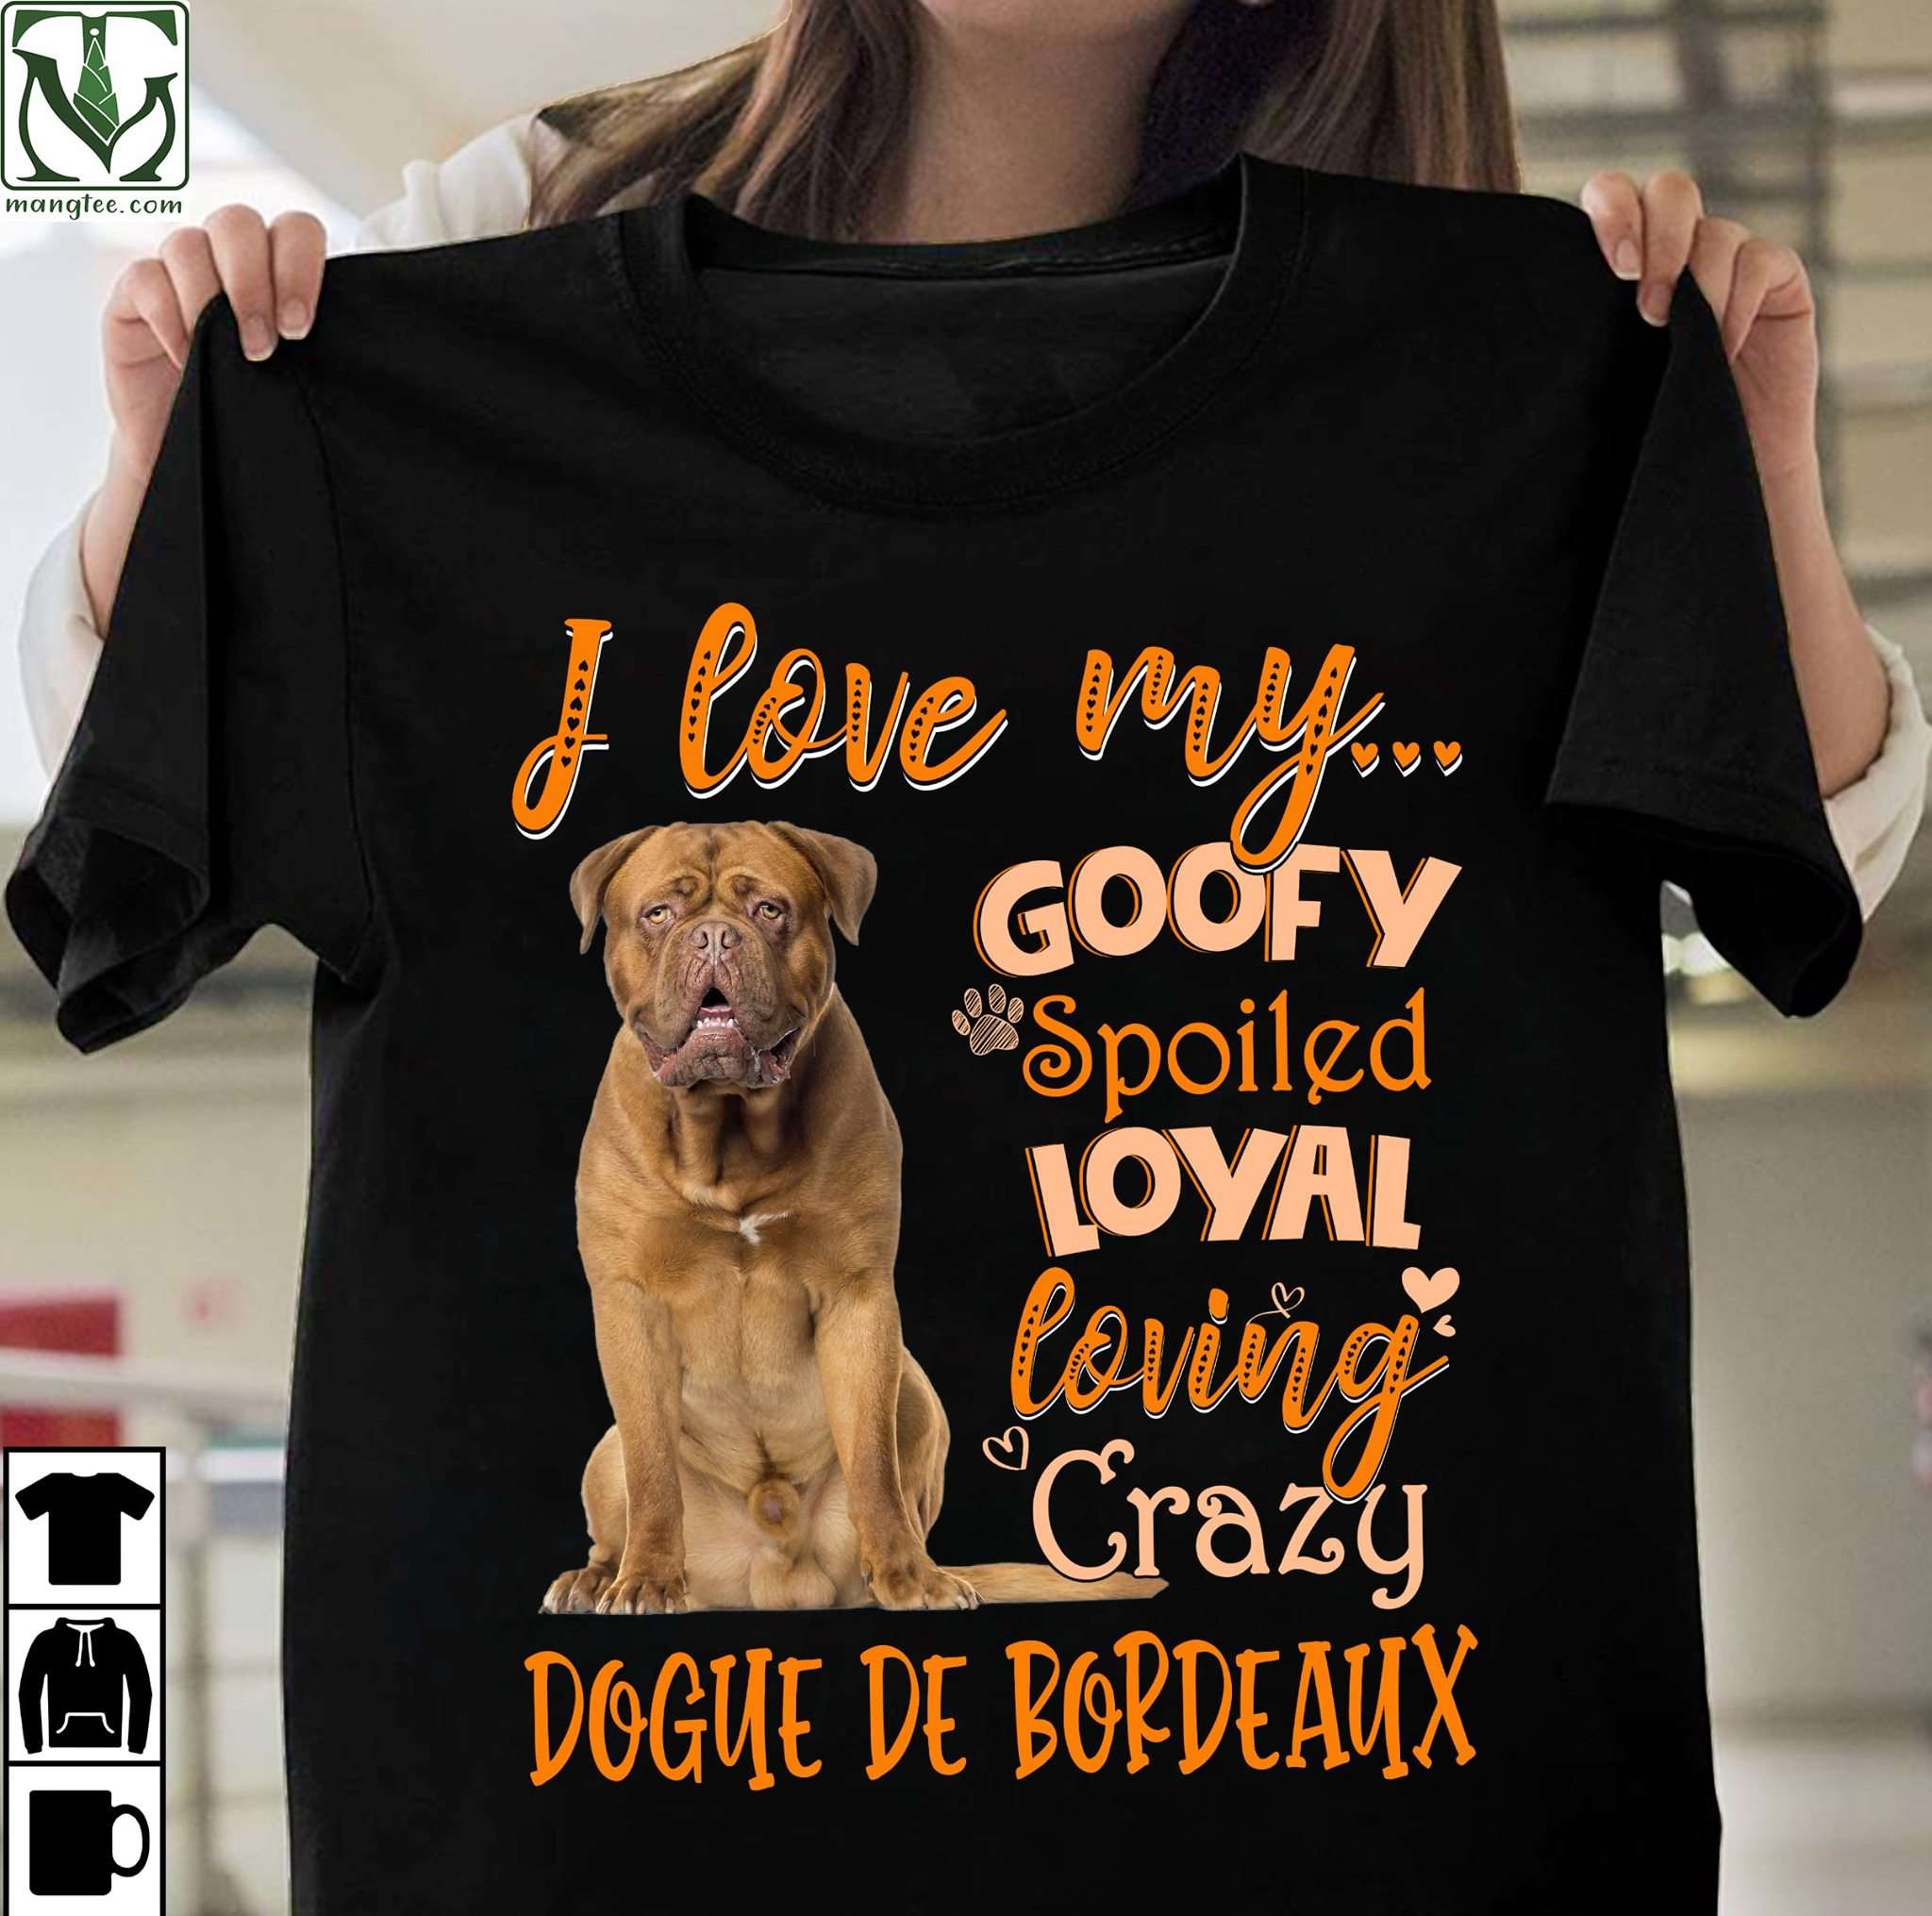 I love my goofy spoiled loyal Dogue de Bordeaux - Dog lover